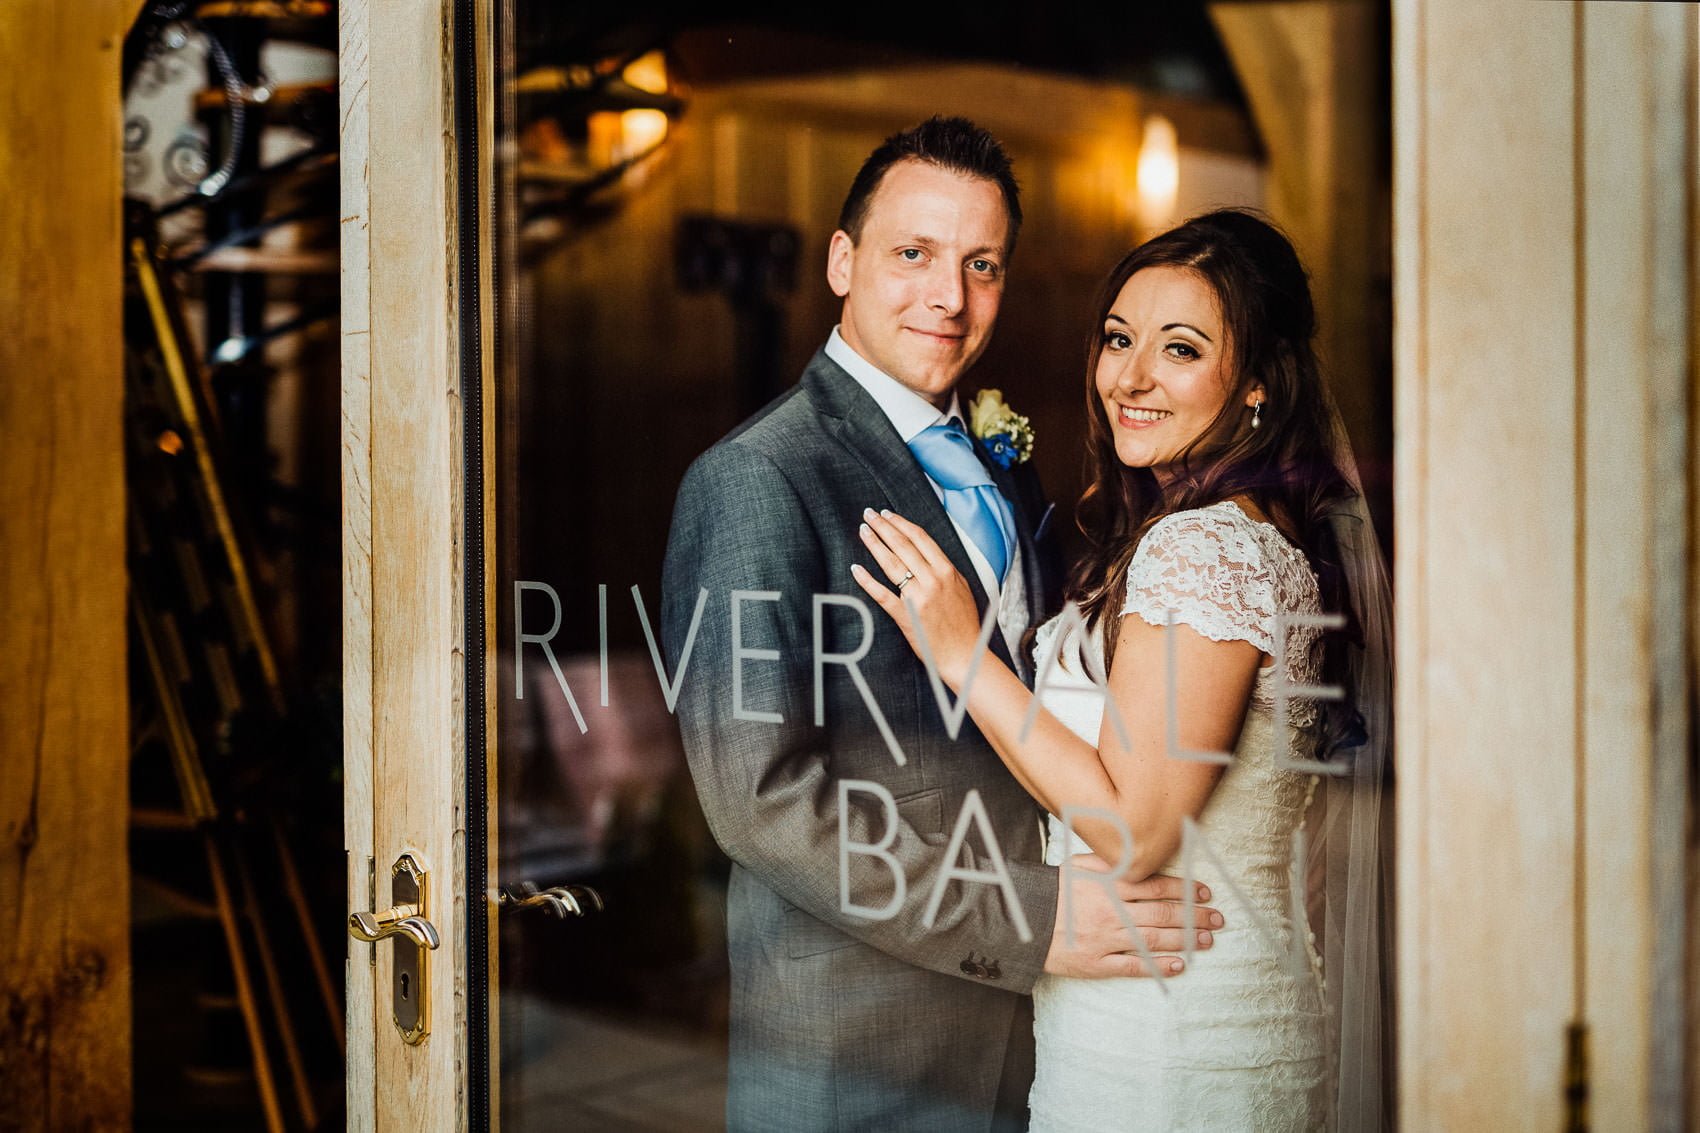 Rivervale Barn Wedding Photography